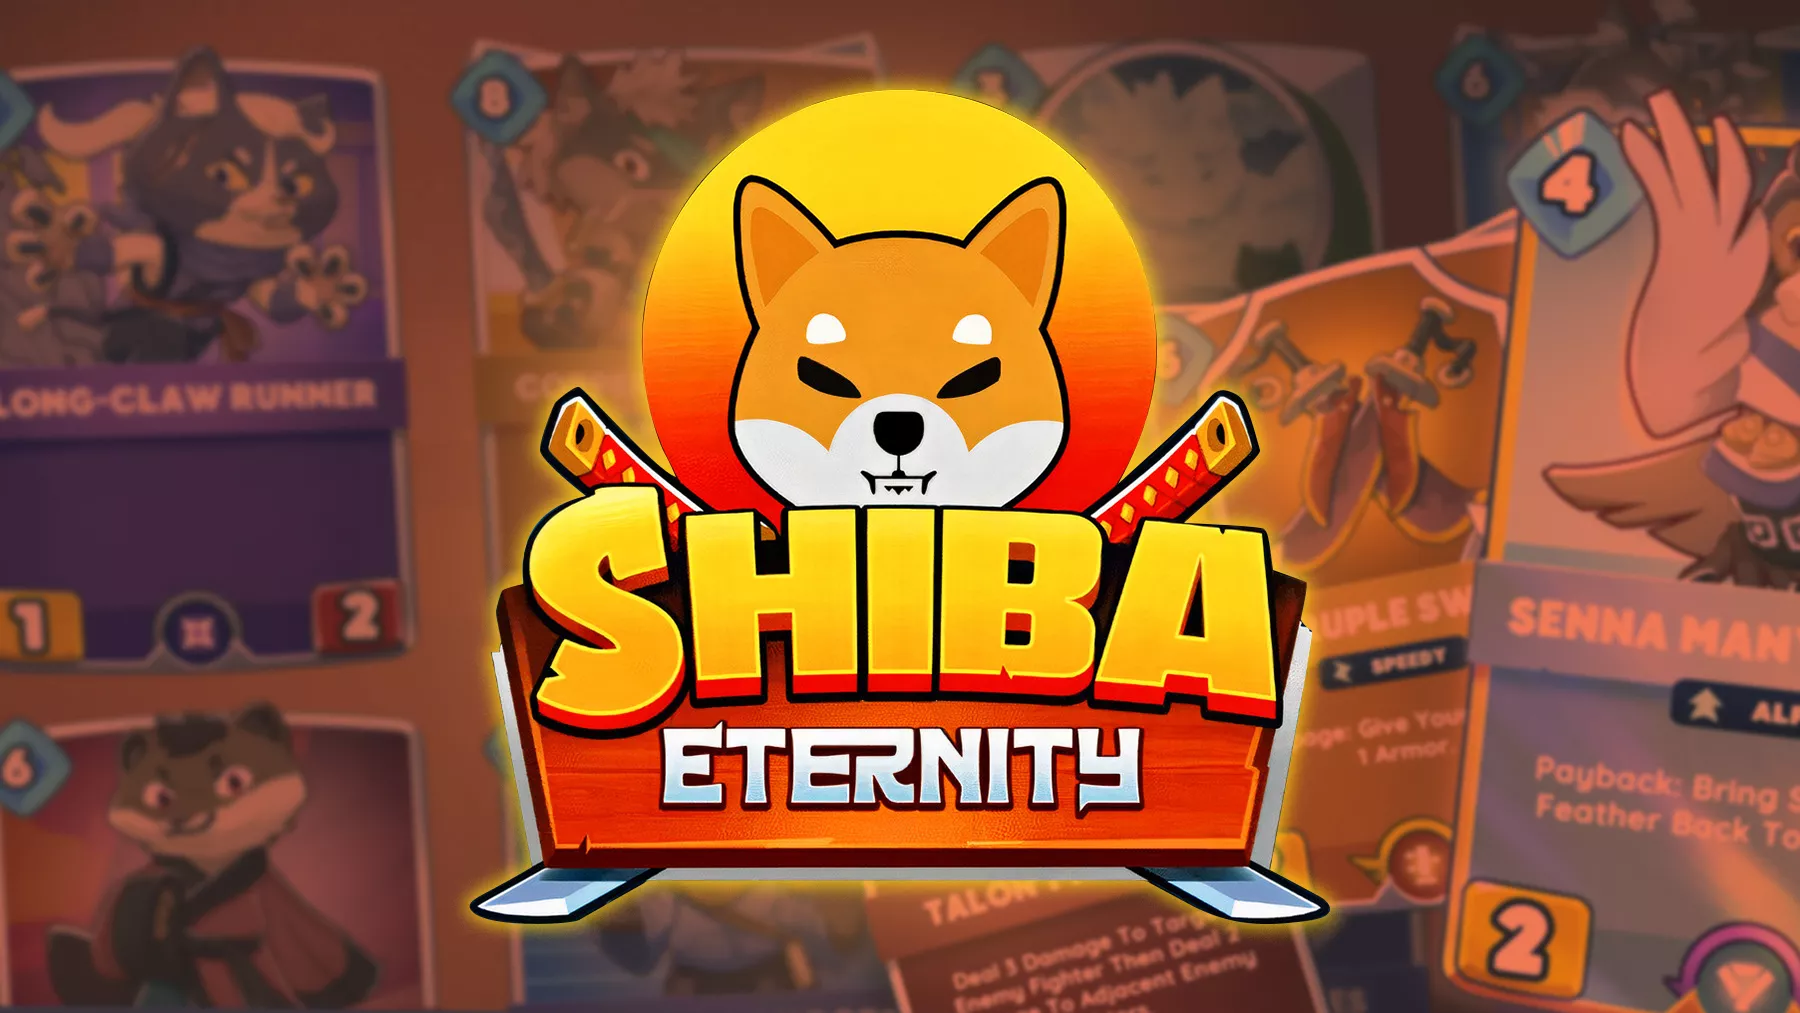 Shiba Inu’s F2P Game Shiba Eternity Launches Globally